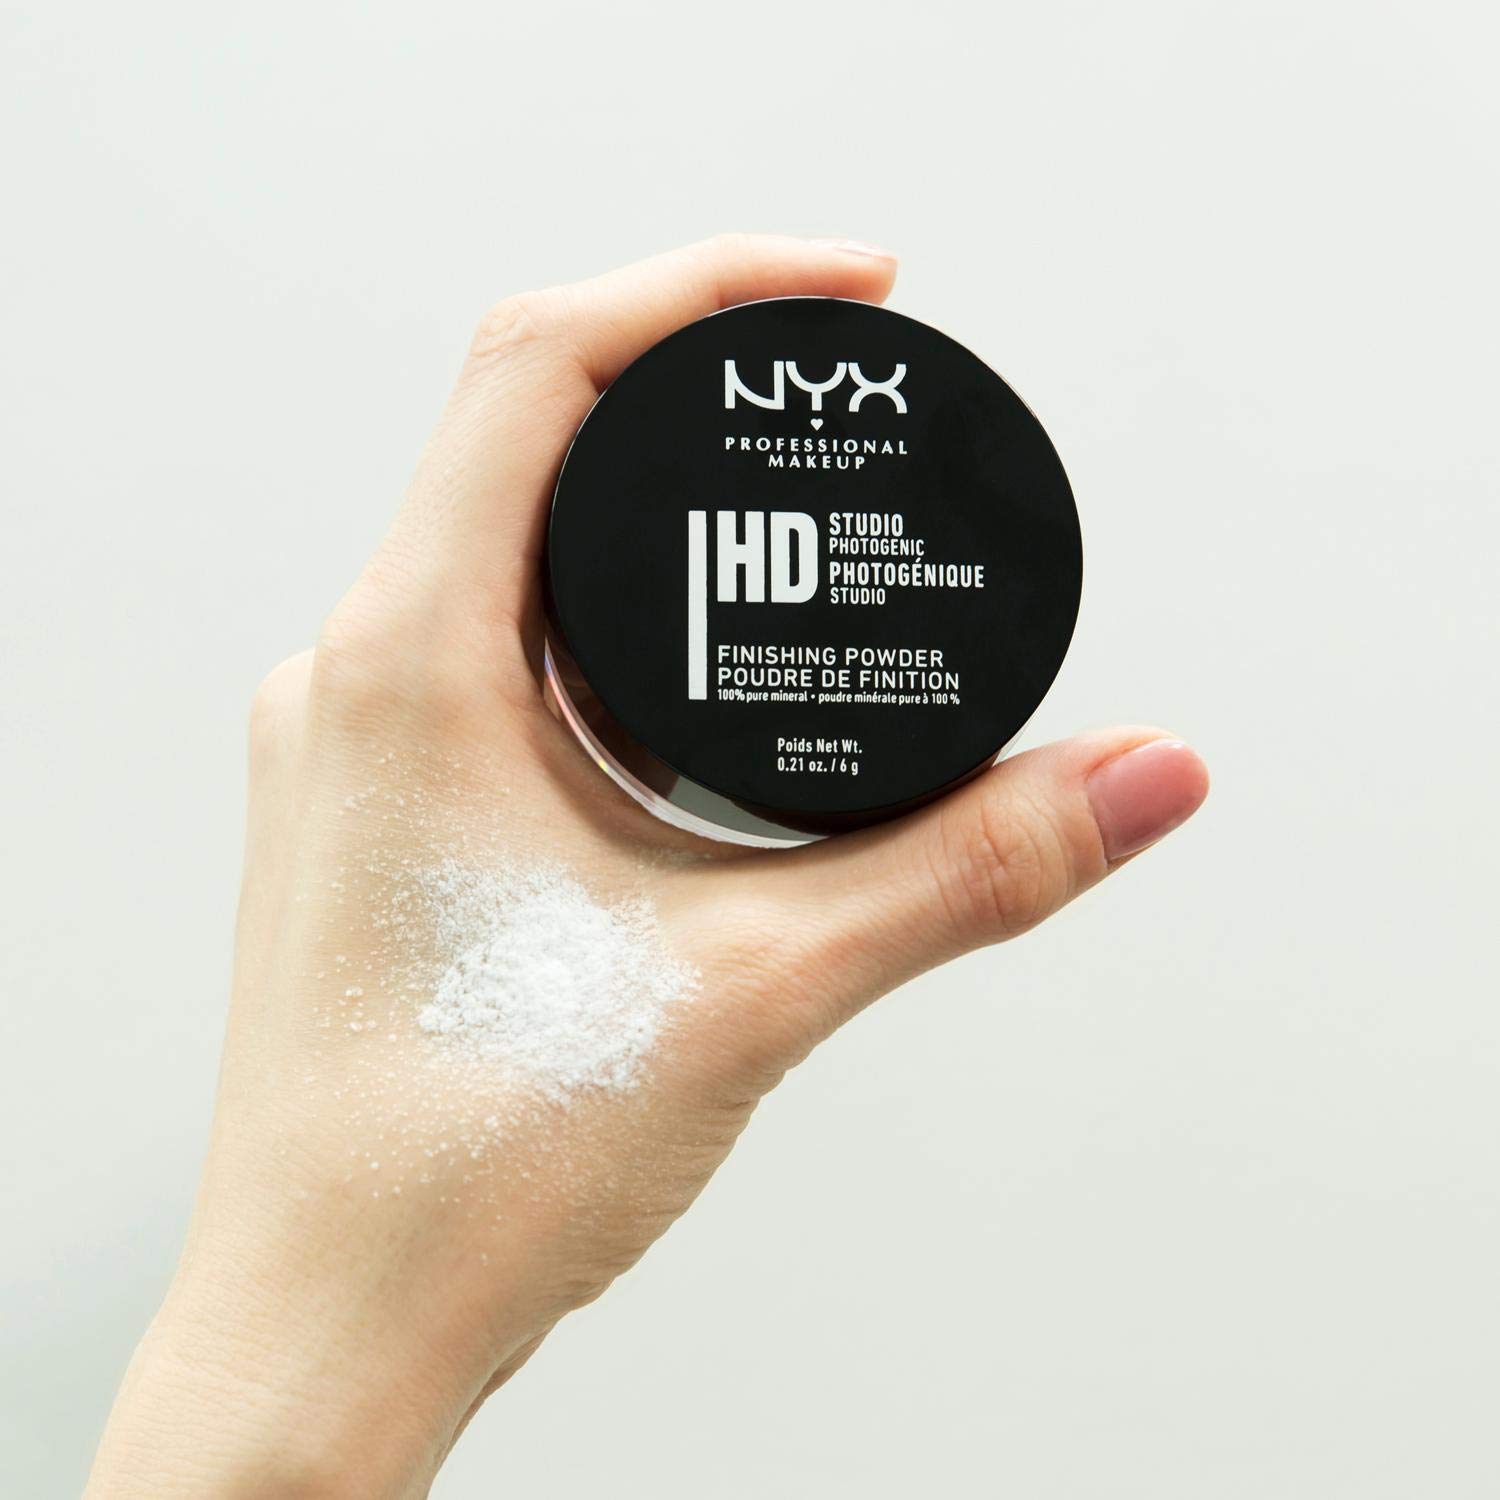 Esitellä 60+ imagen nyx professional makeup studio finishing powder